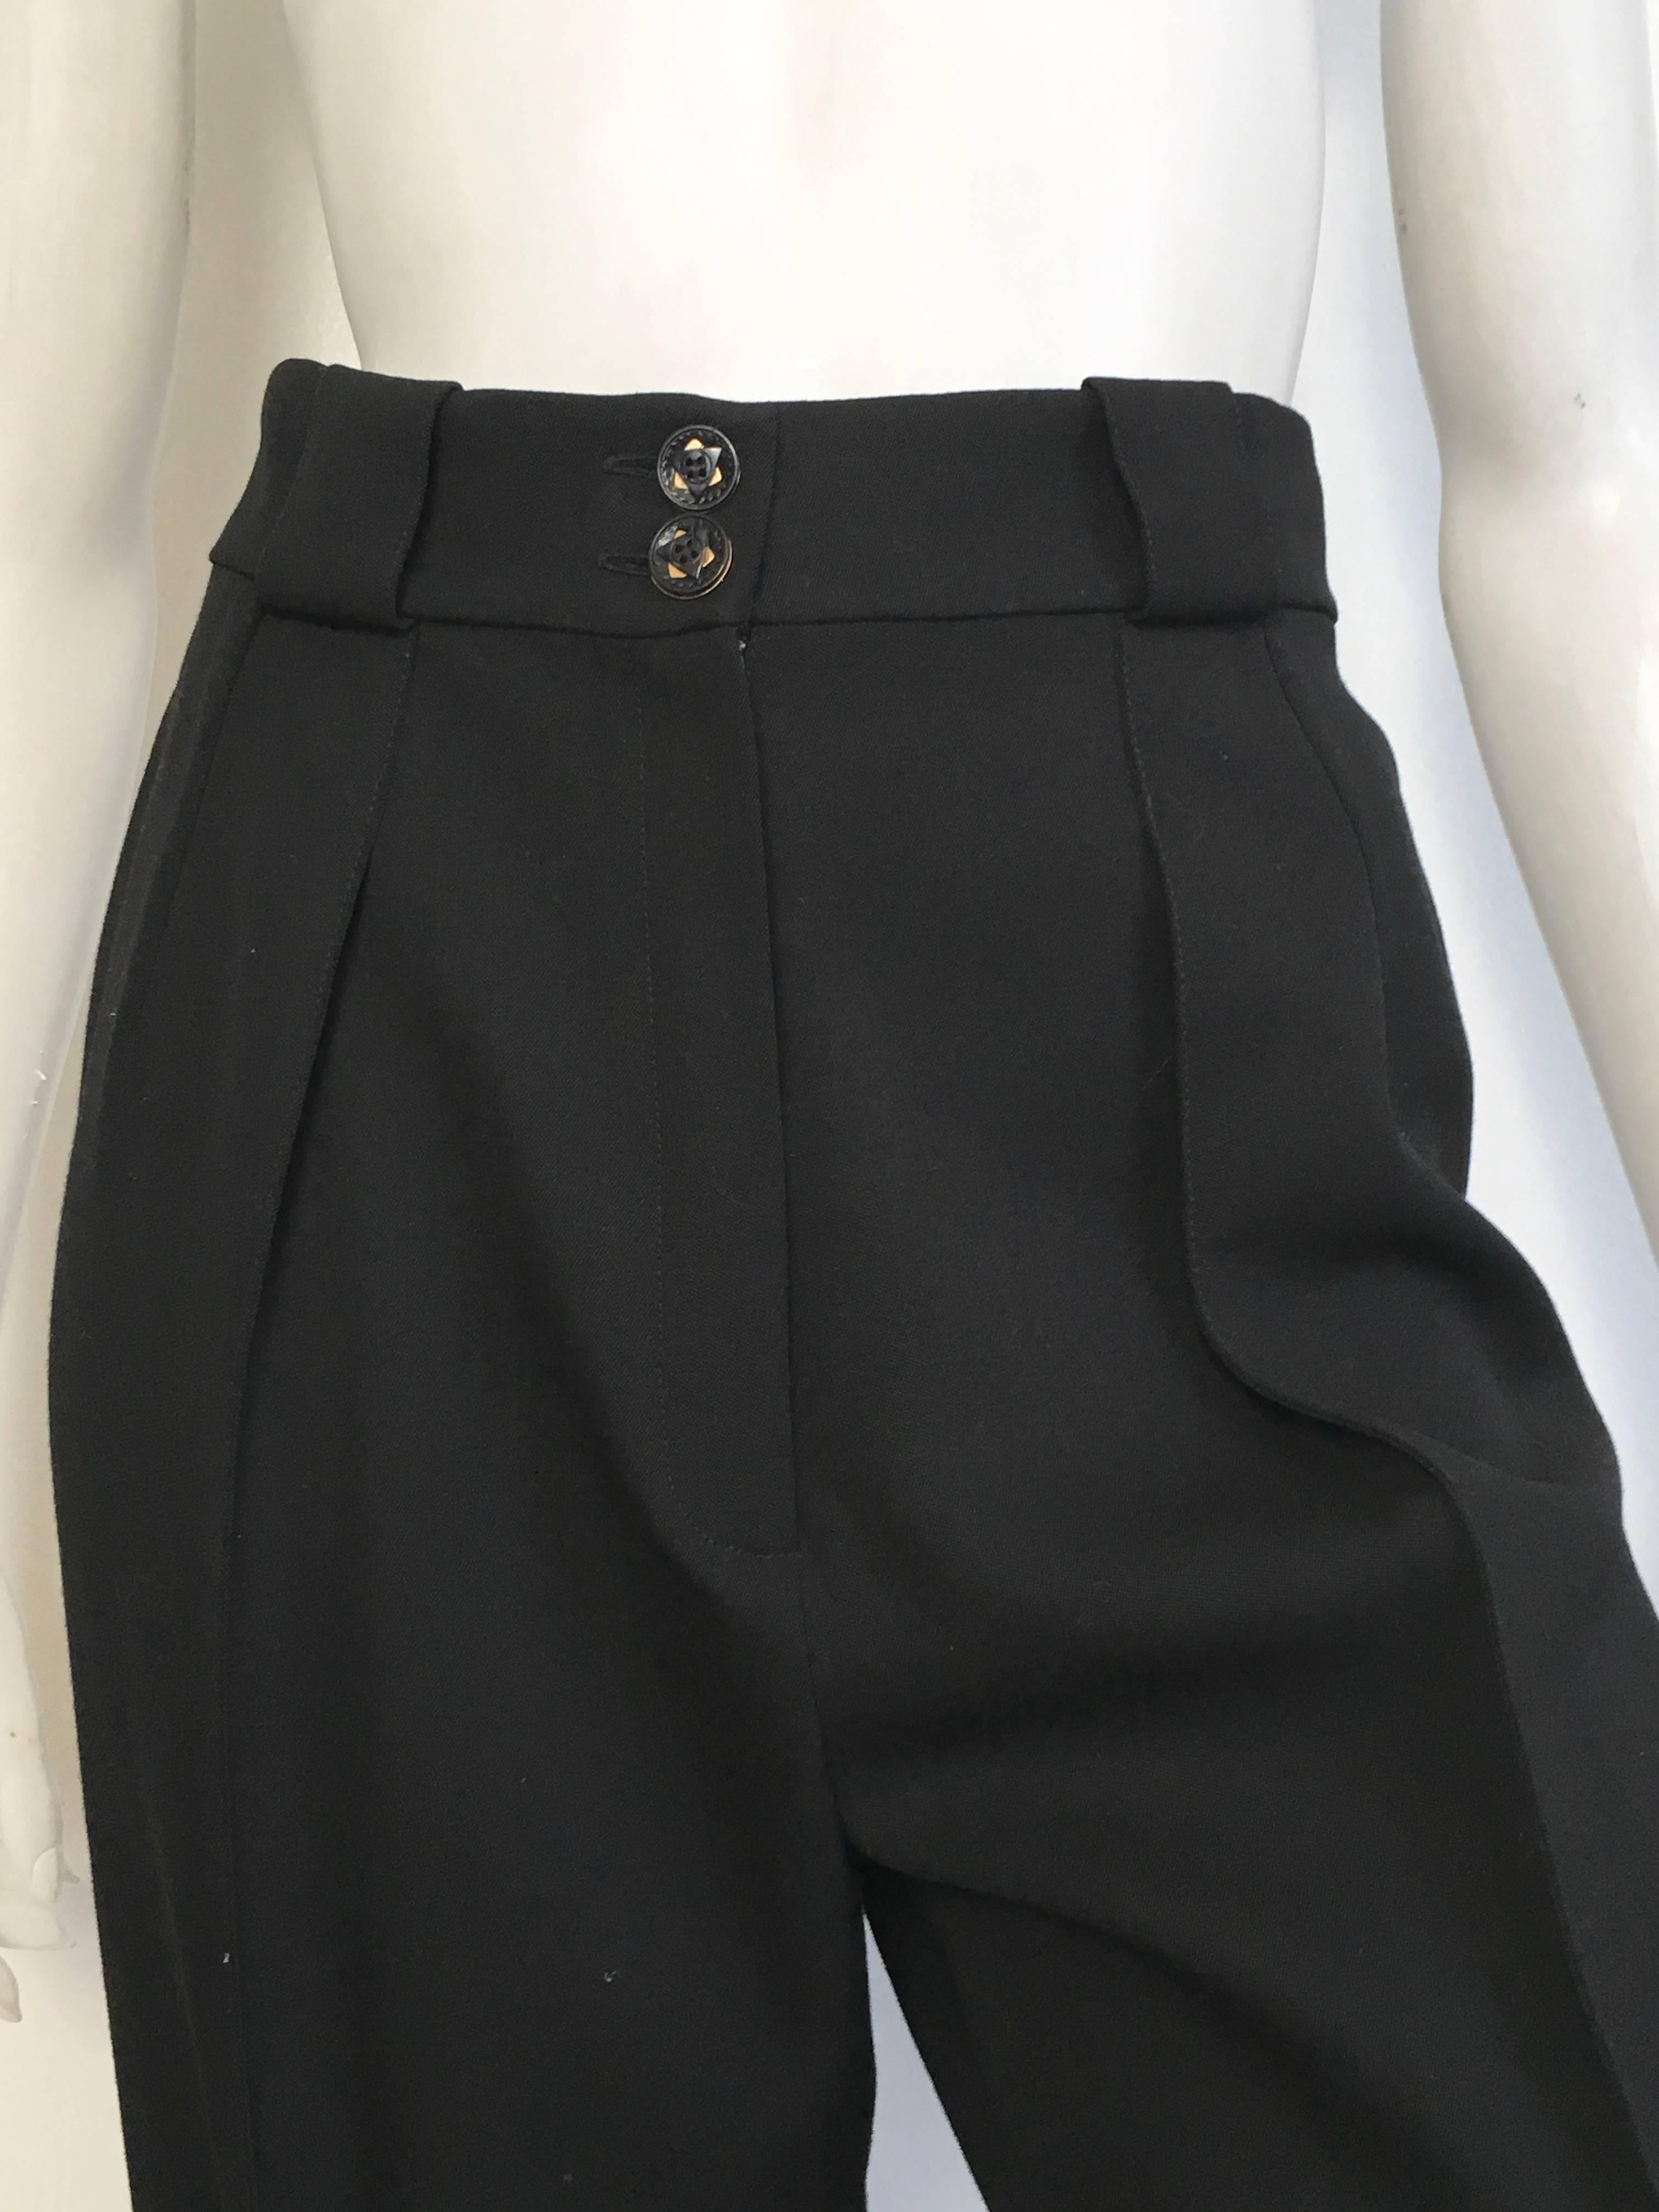 Women's or Men's Karl Lagerfeld 1980s Black Wool Pleated Pants Size 4/6. For Sale